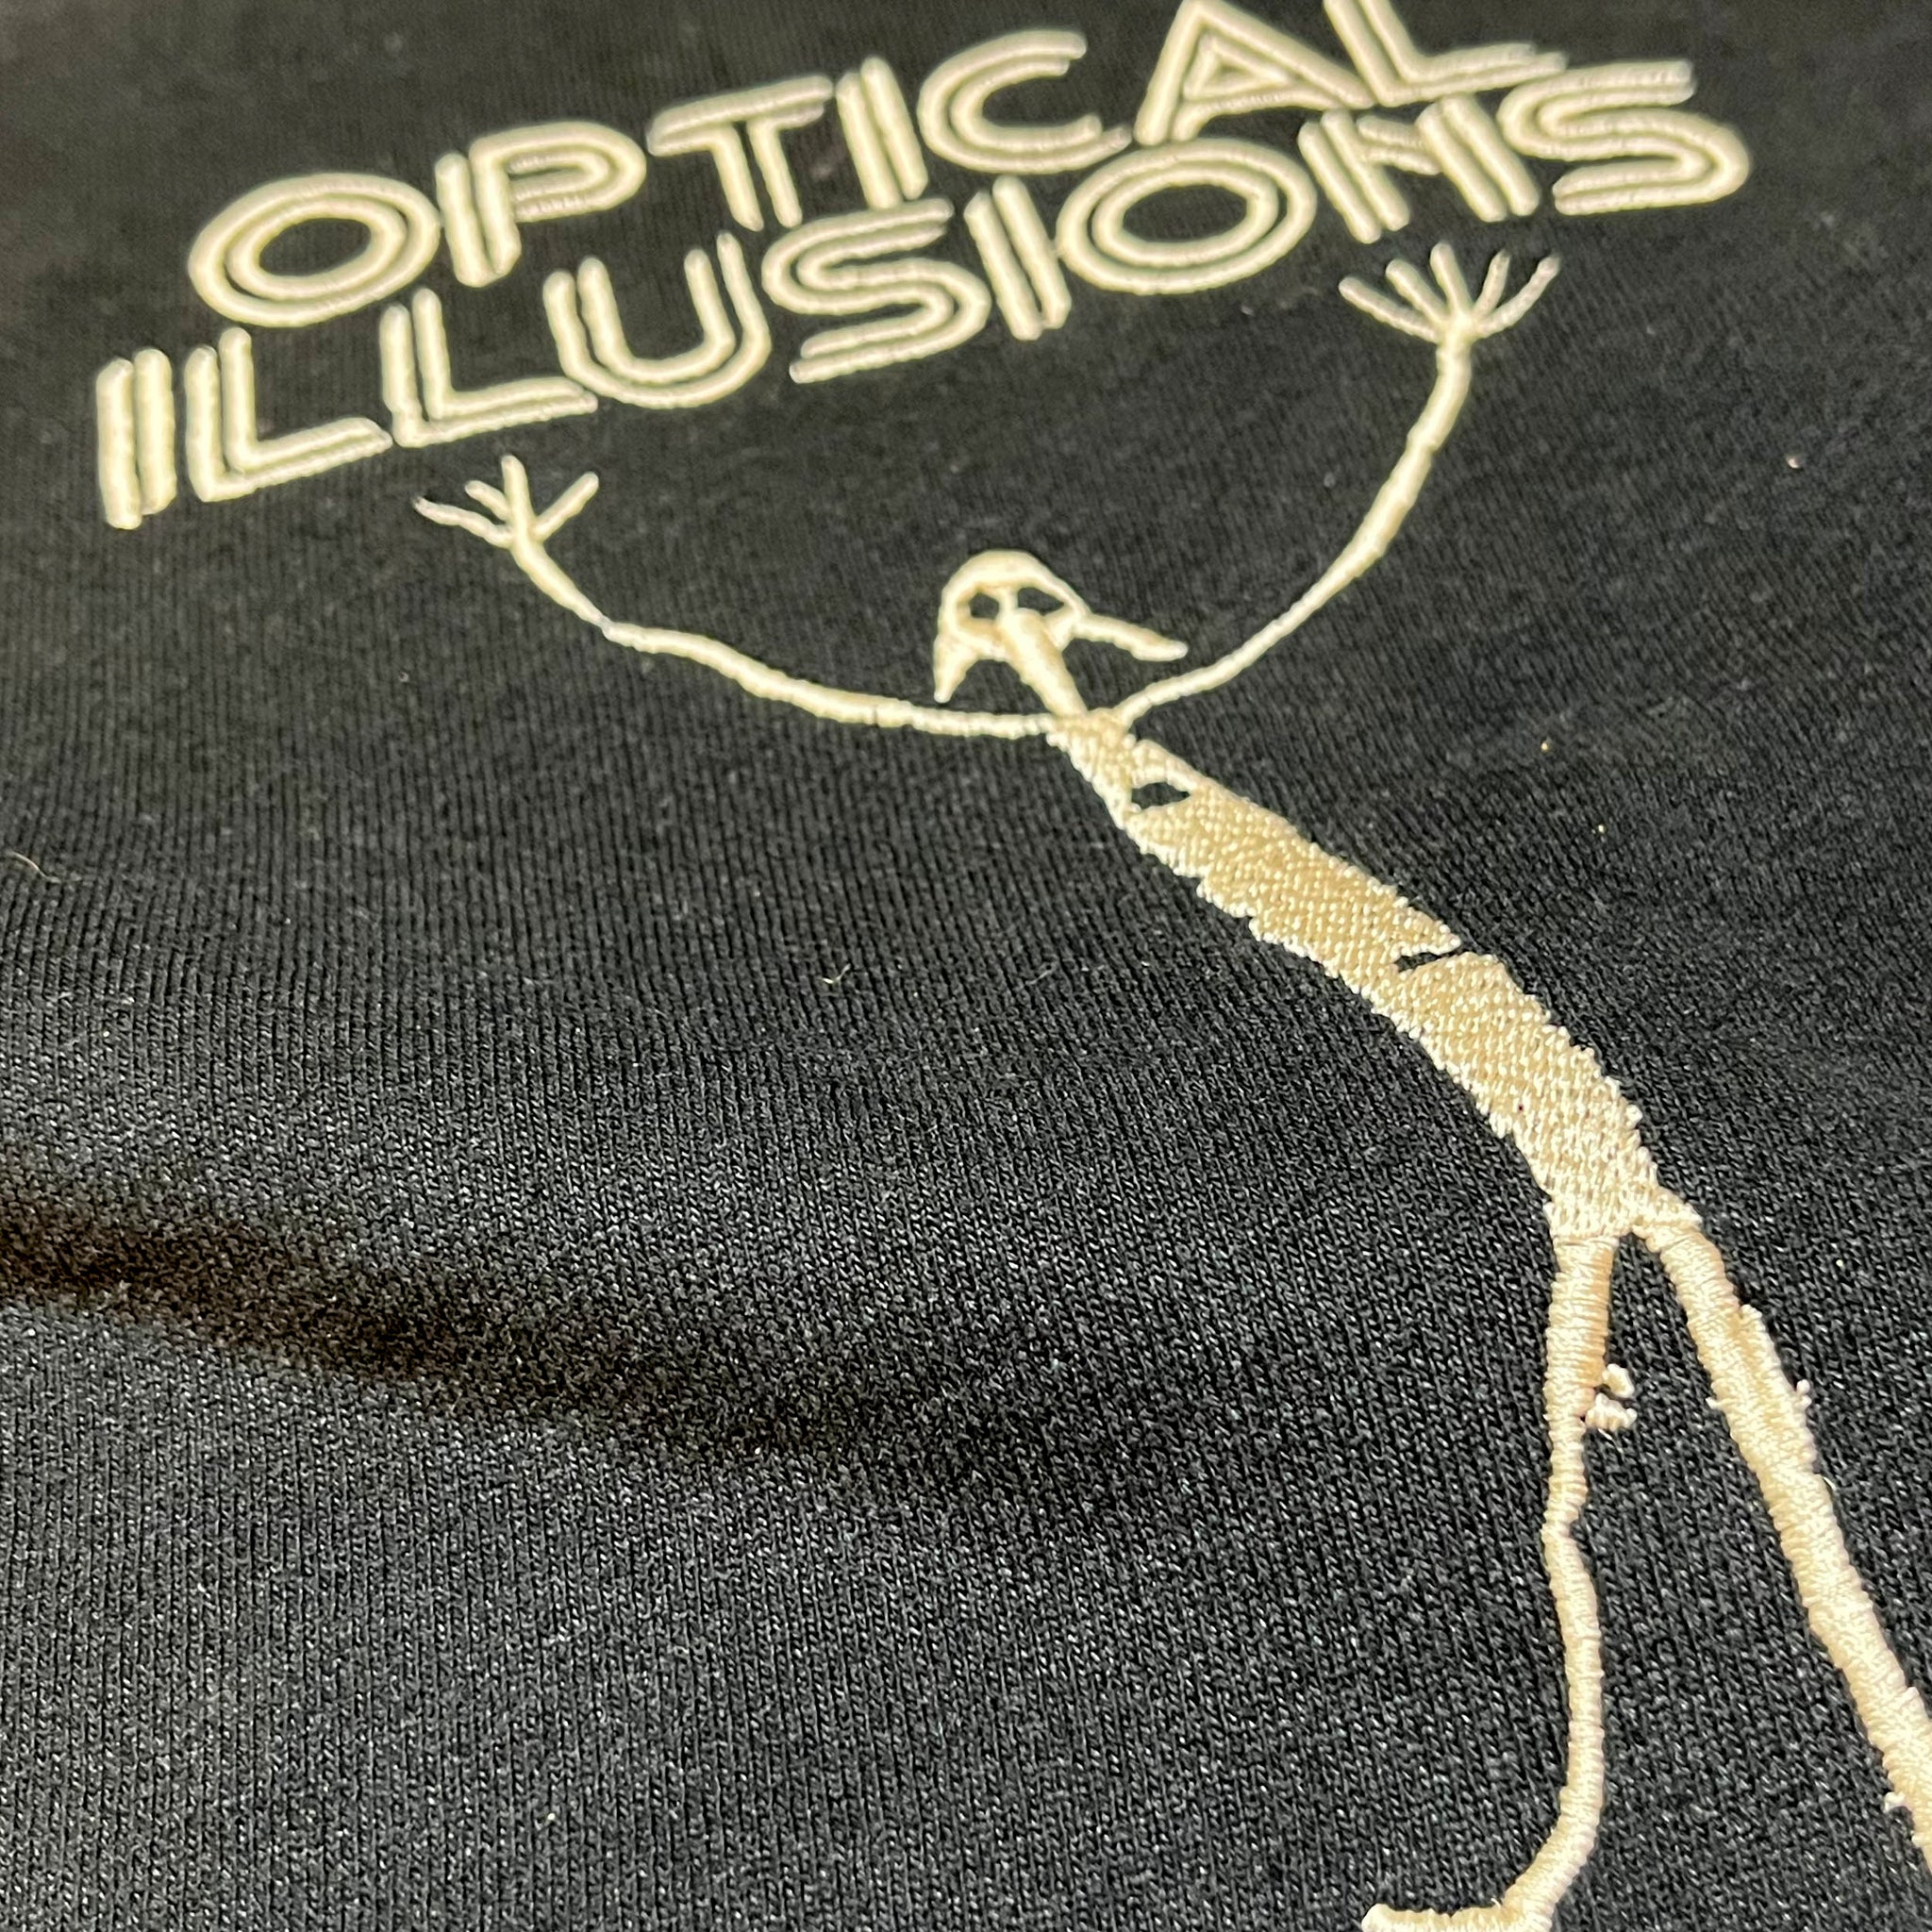 Optical Illusions Heavy Weight Sweatshirt Black